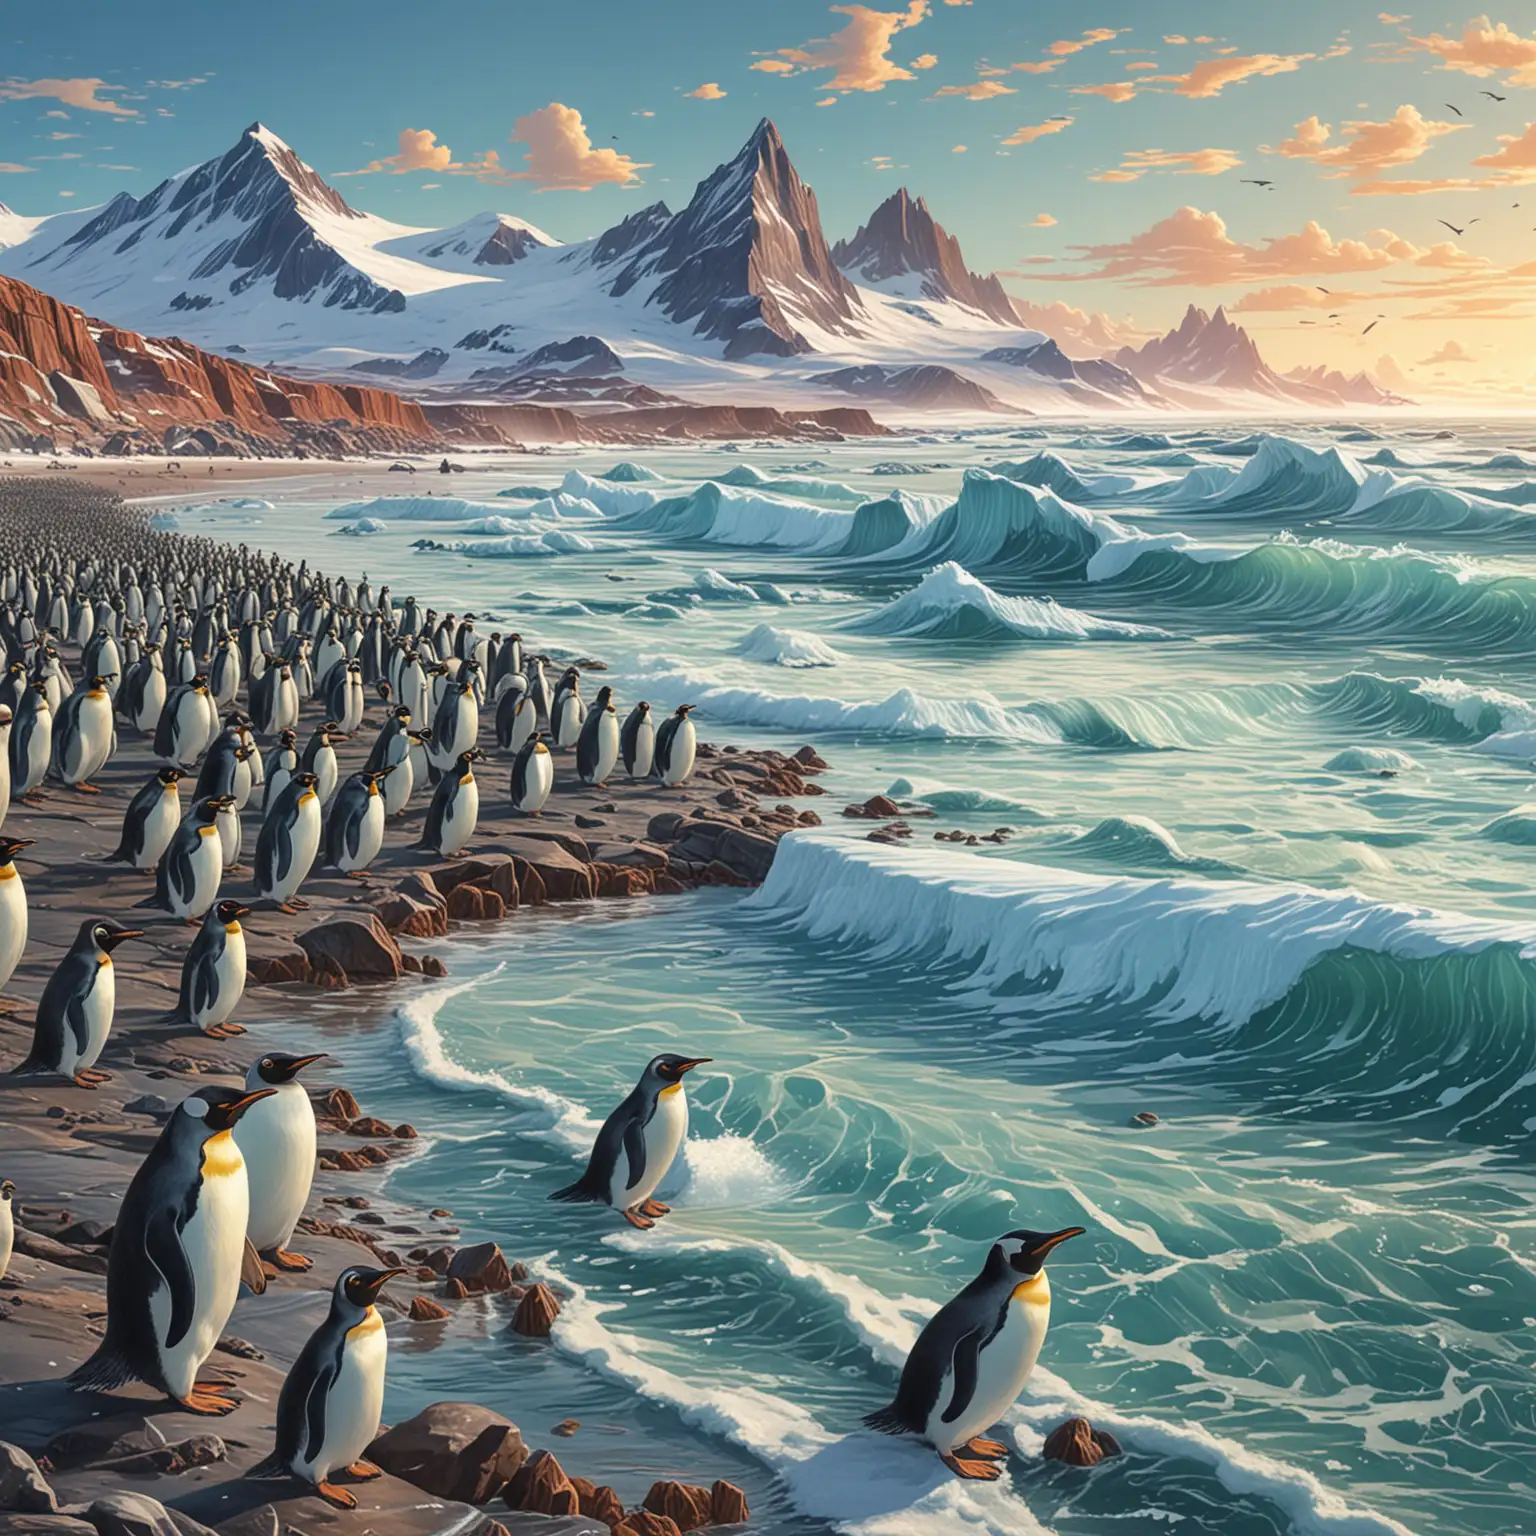 Antarctica Wildlife Penguins Seals and Seabirds on Ice